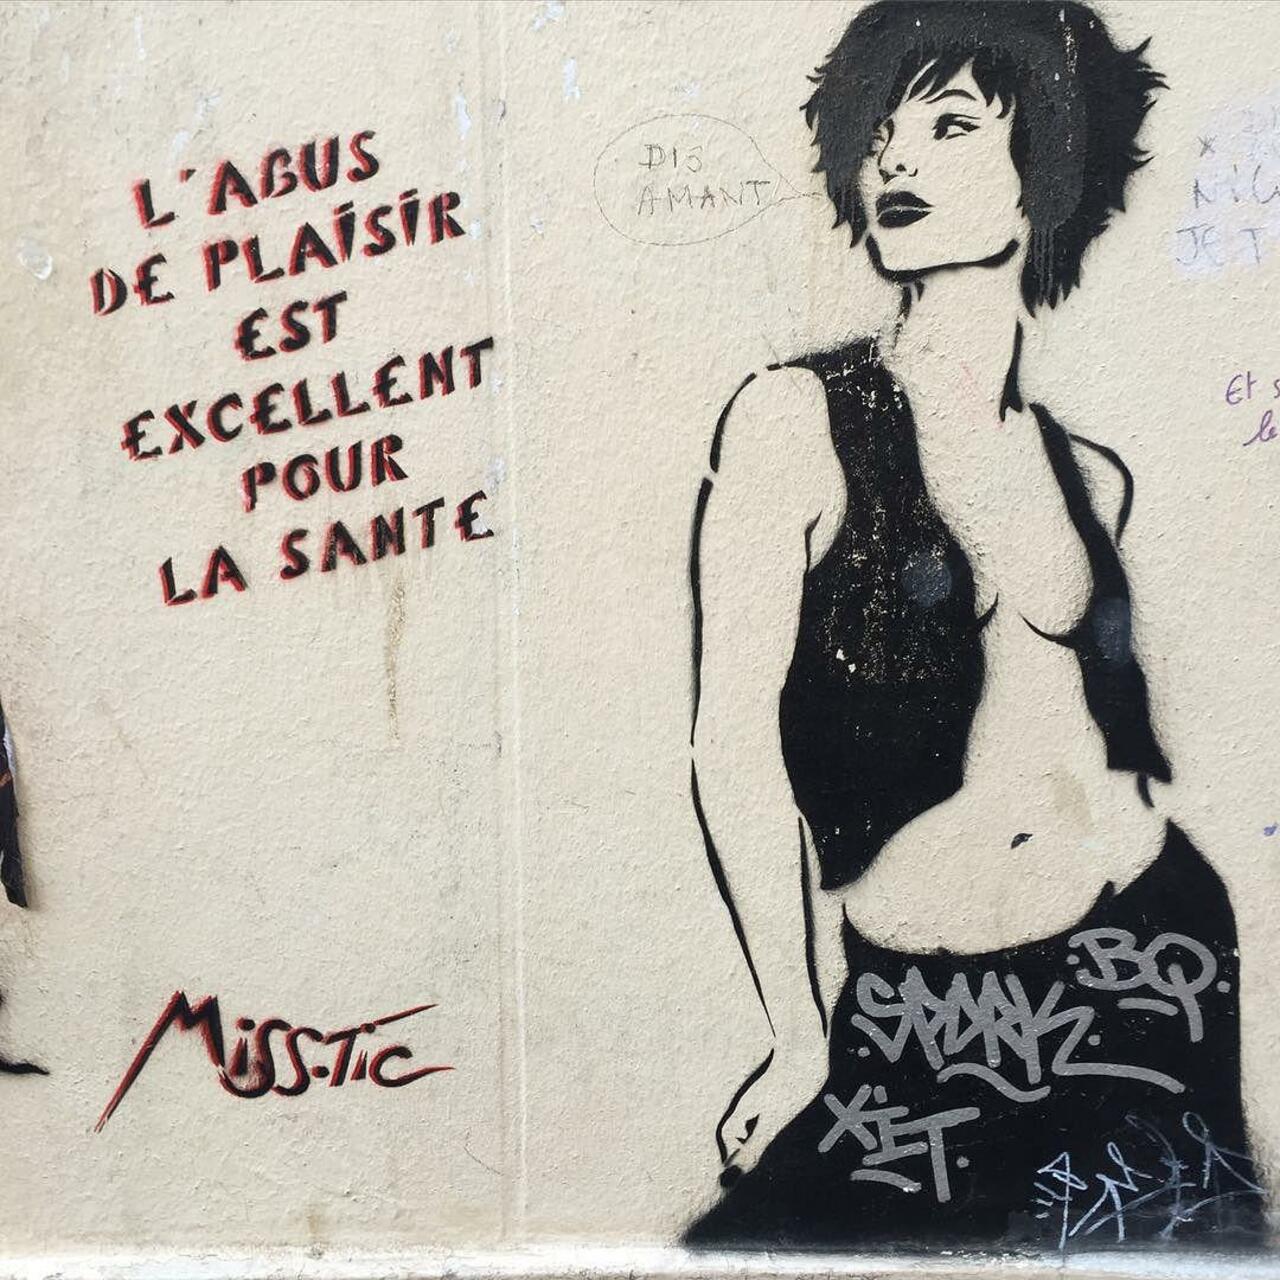 #Paris #graffiti photo by @catscoffeecreativity http://ift.tt/1Luxtv3 #StreetArt http://t.co/XYDxViiaQA